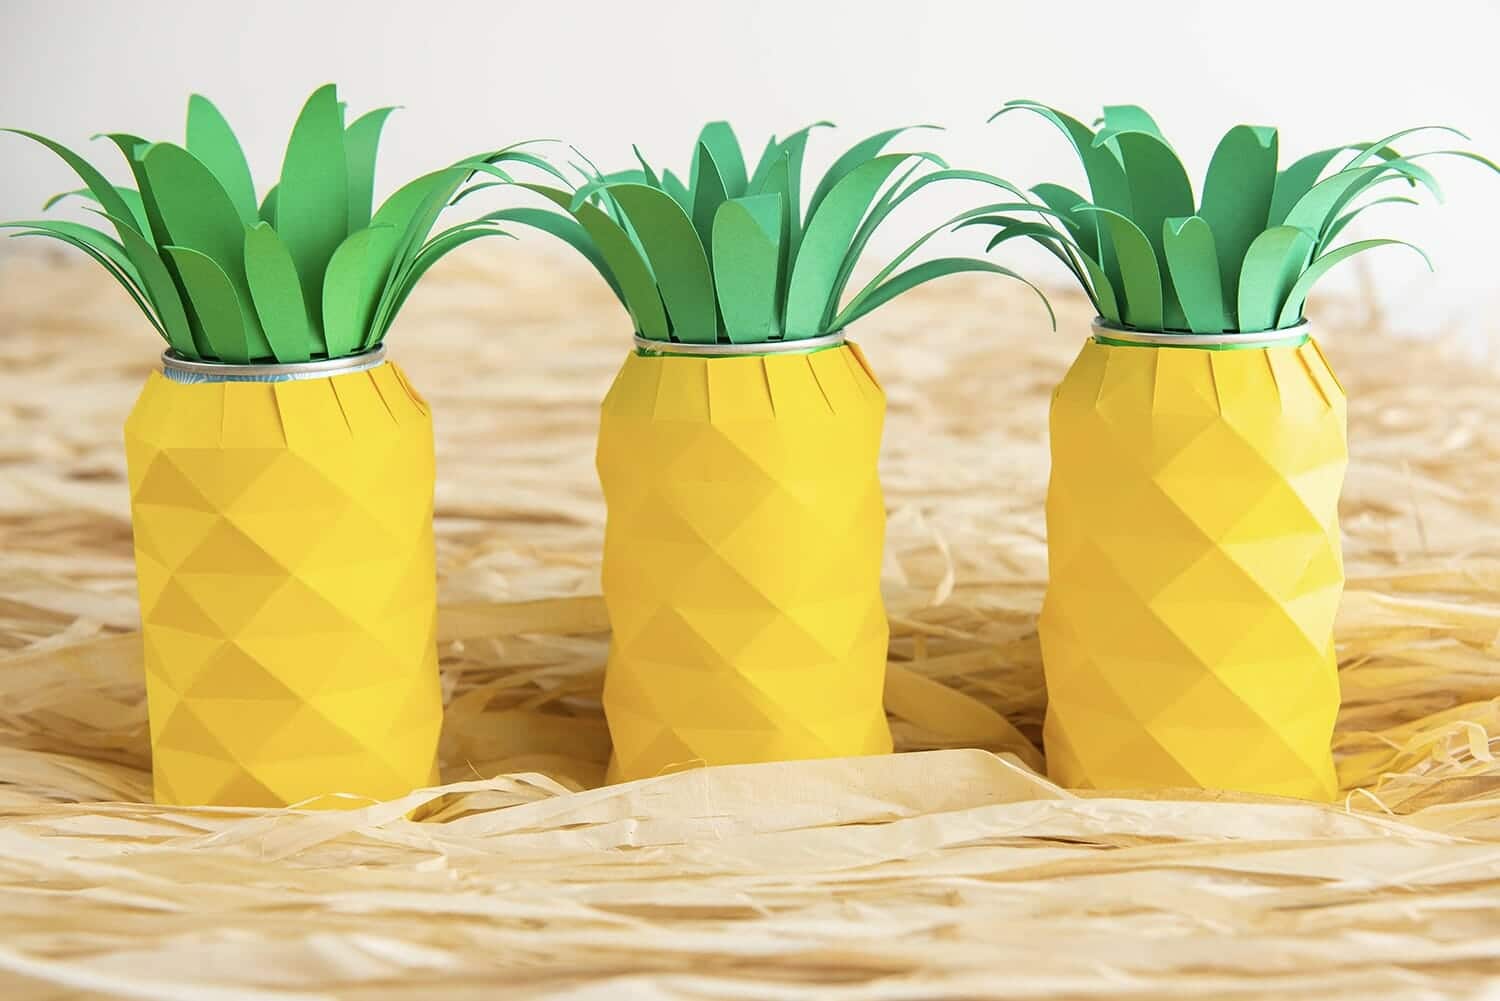 Cricut Craft Room Organization Ideas - Pineapple Paper Co.